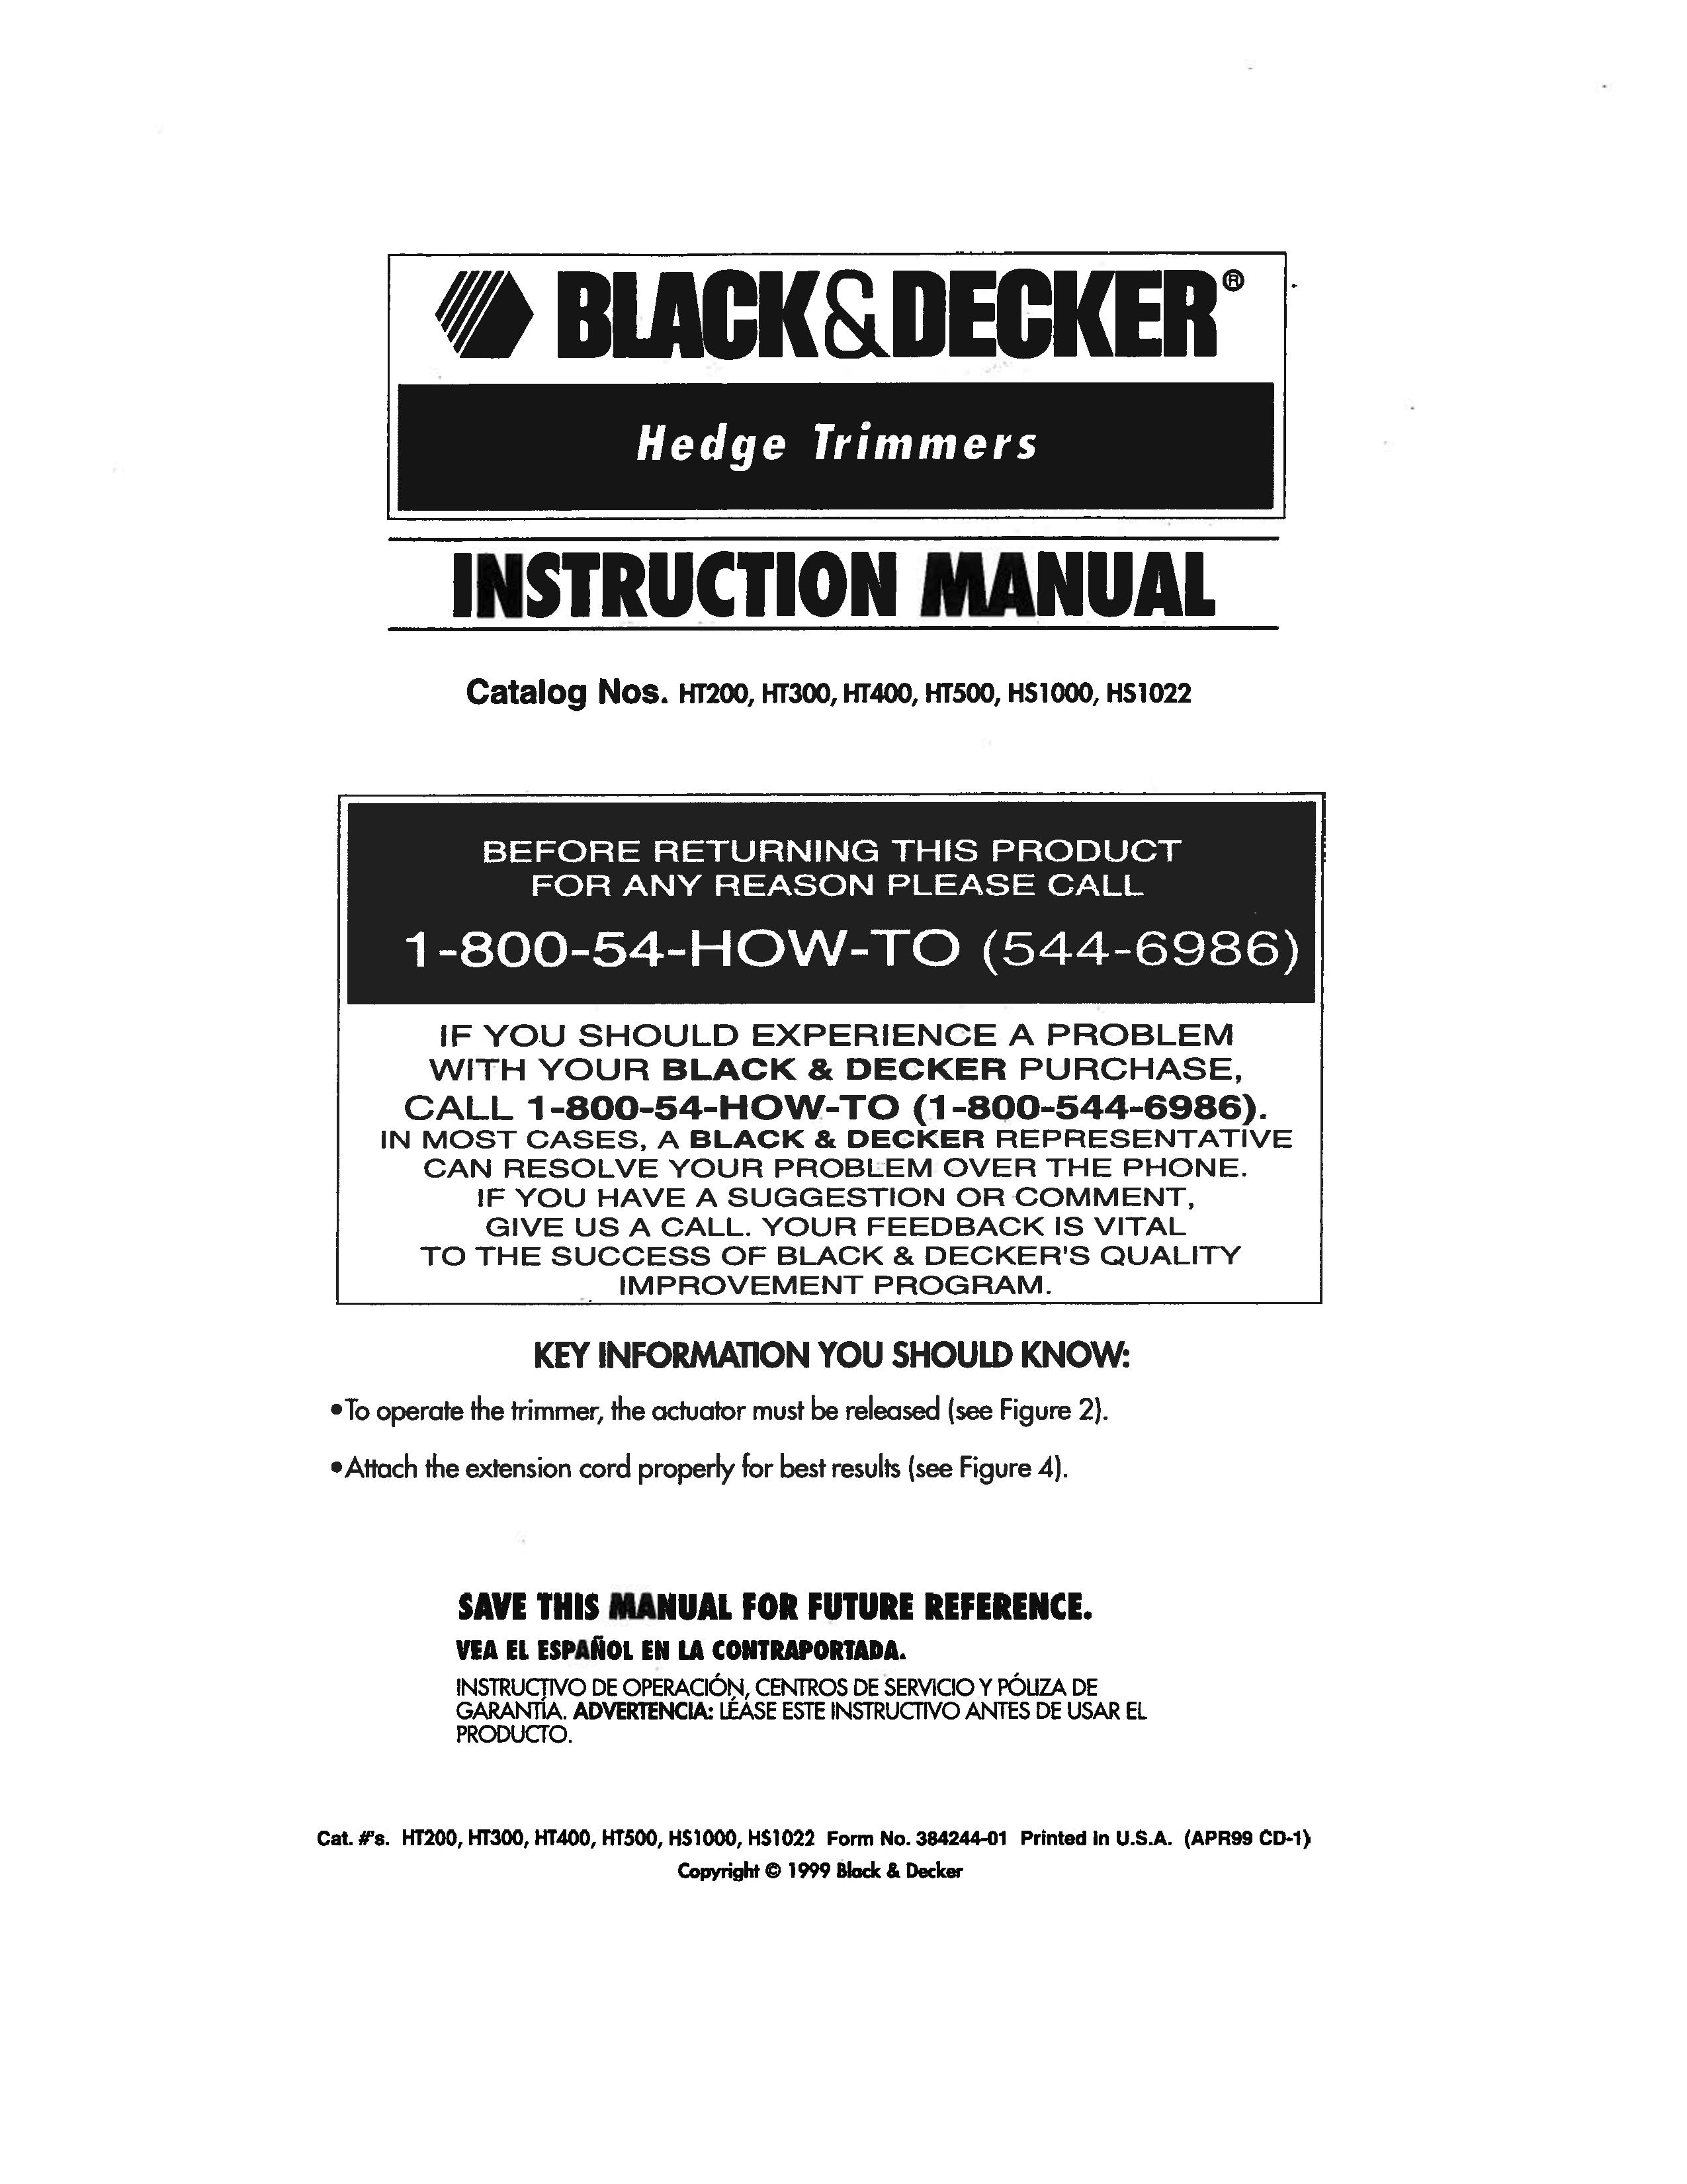 Black & Decker HS1000 Rice Cooker User Manual